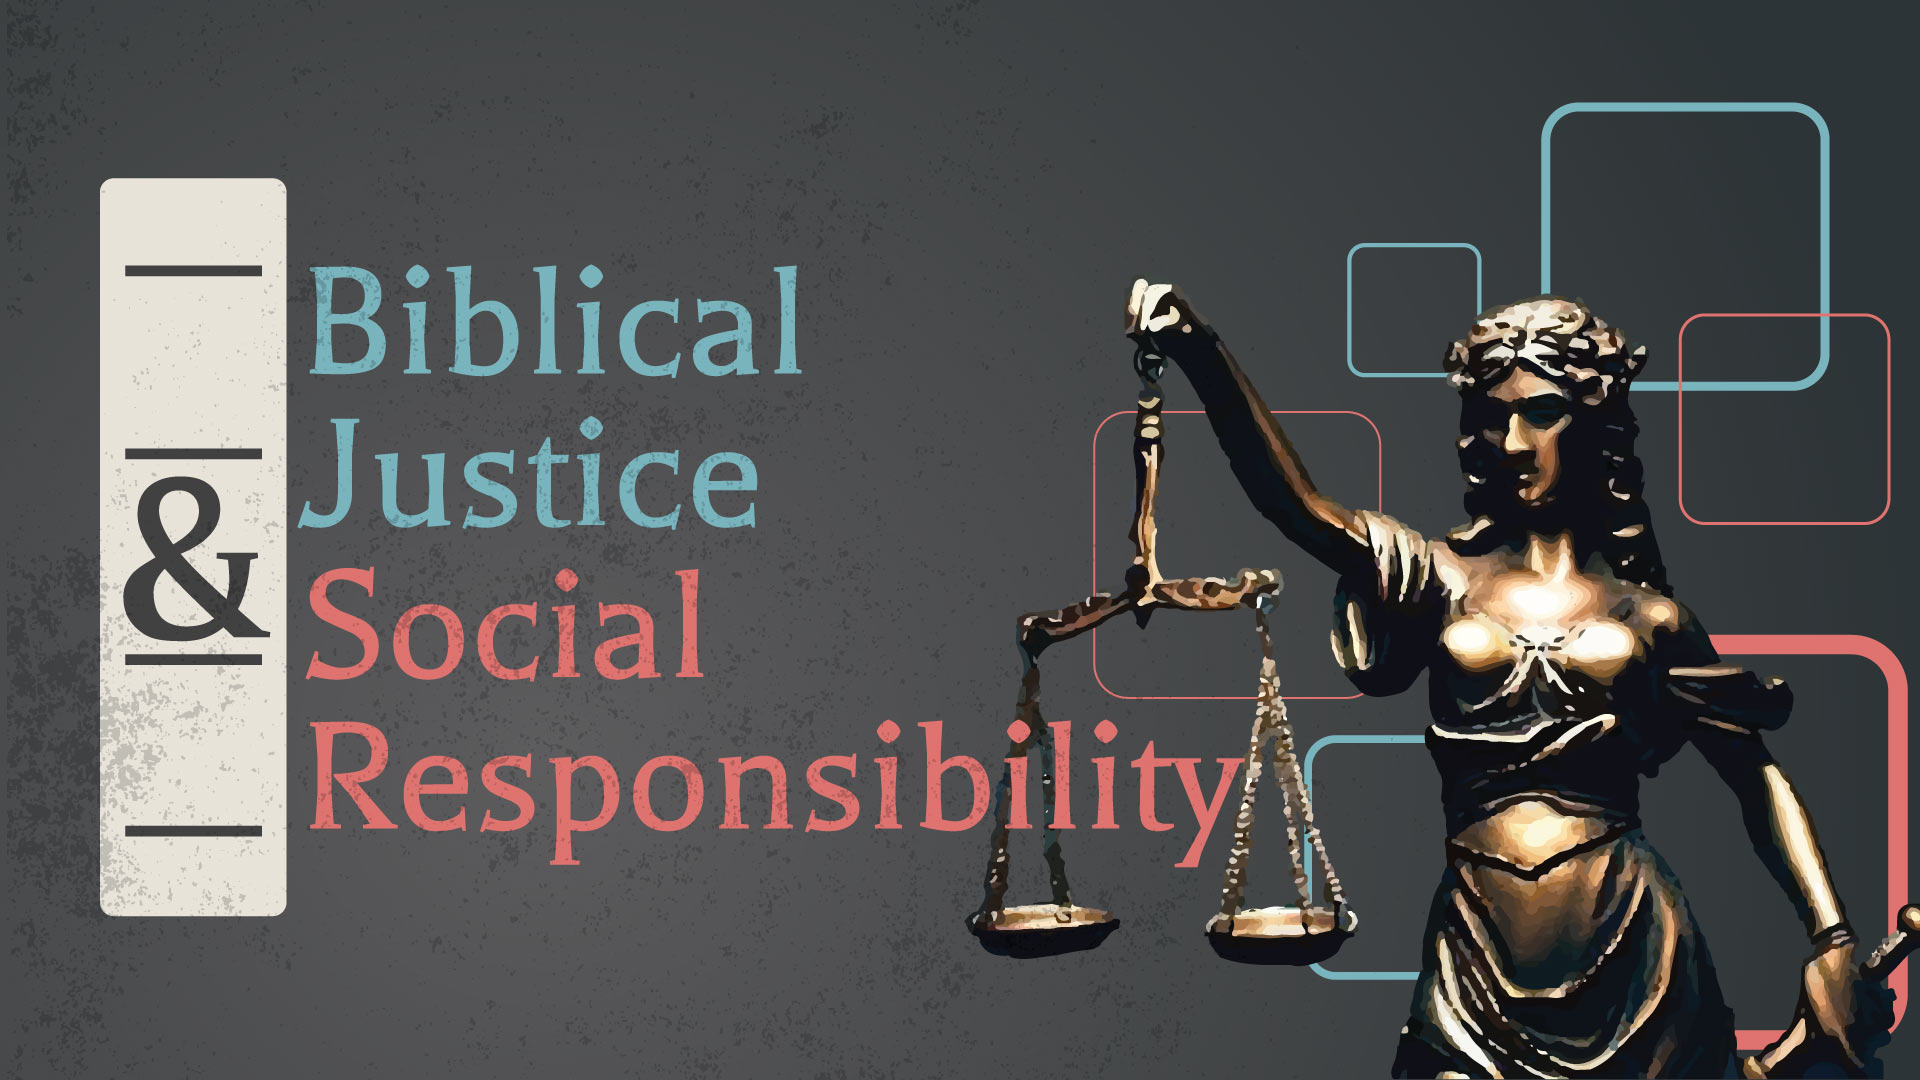 Biblical Justice & Social Responsibility banner